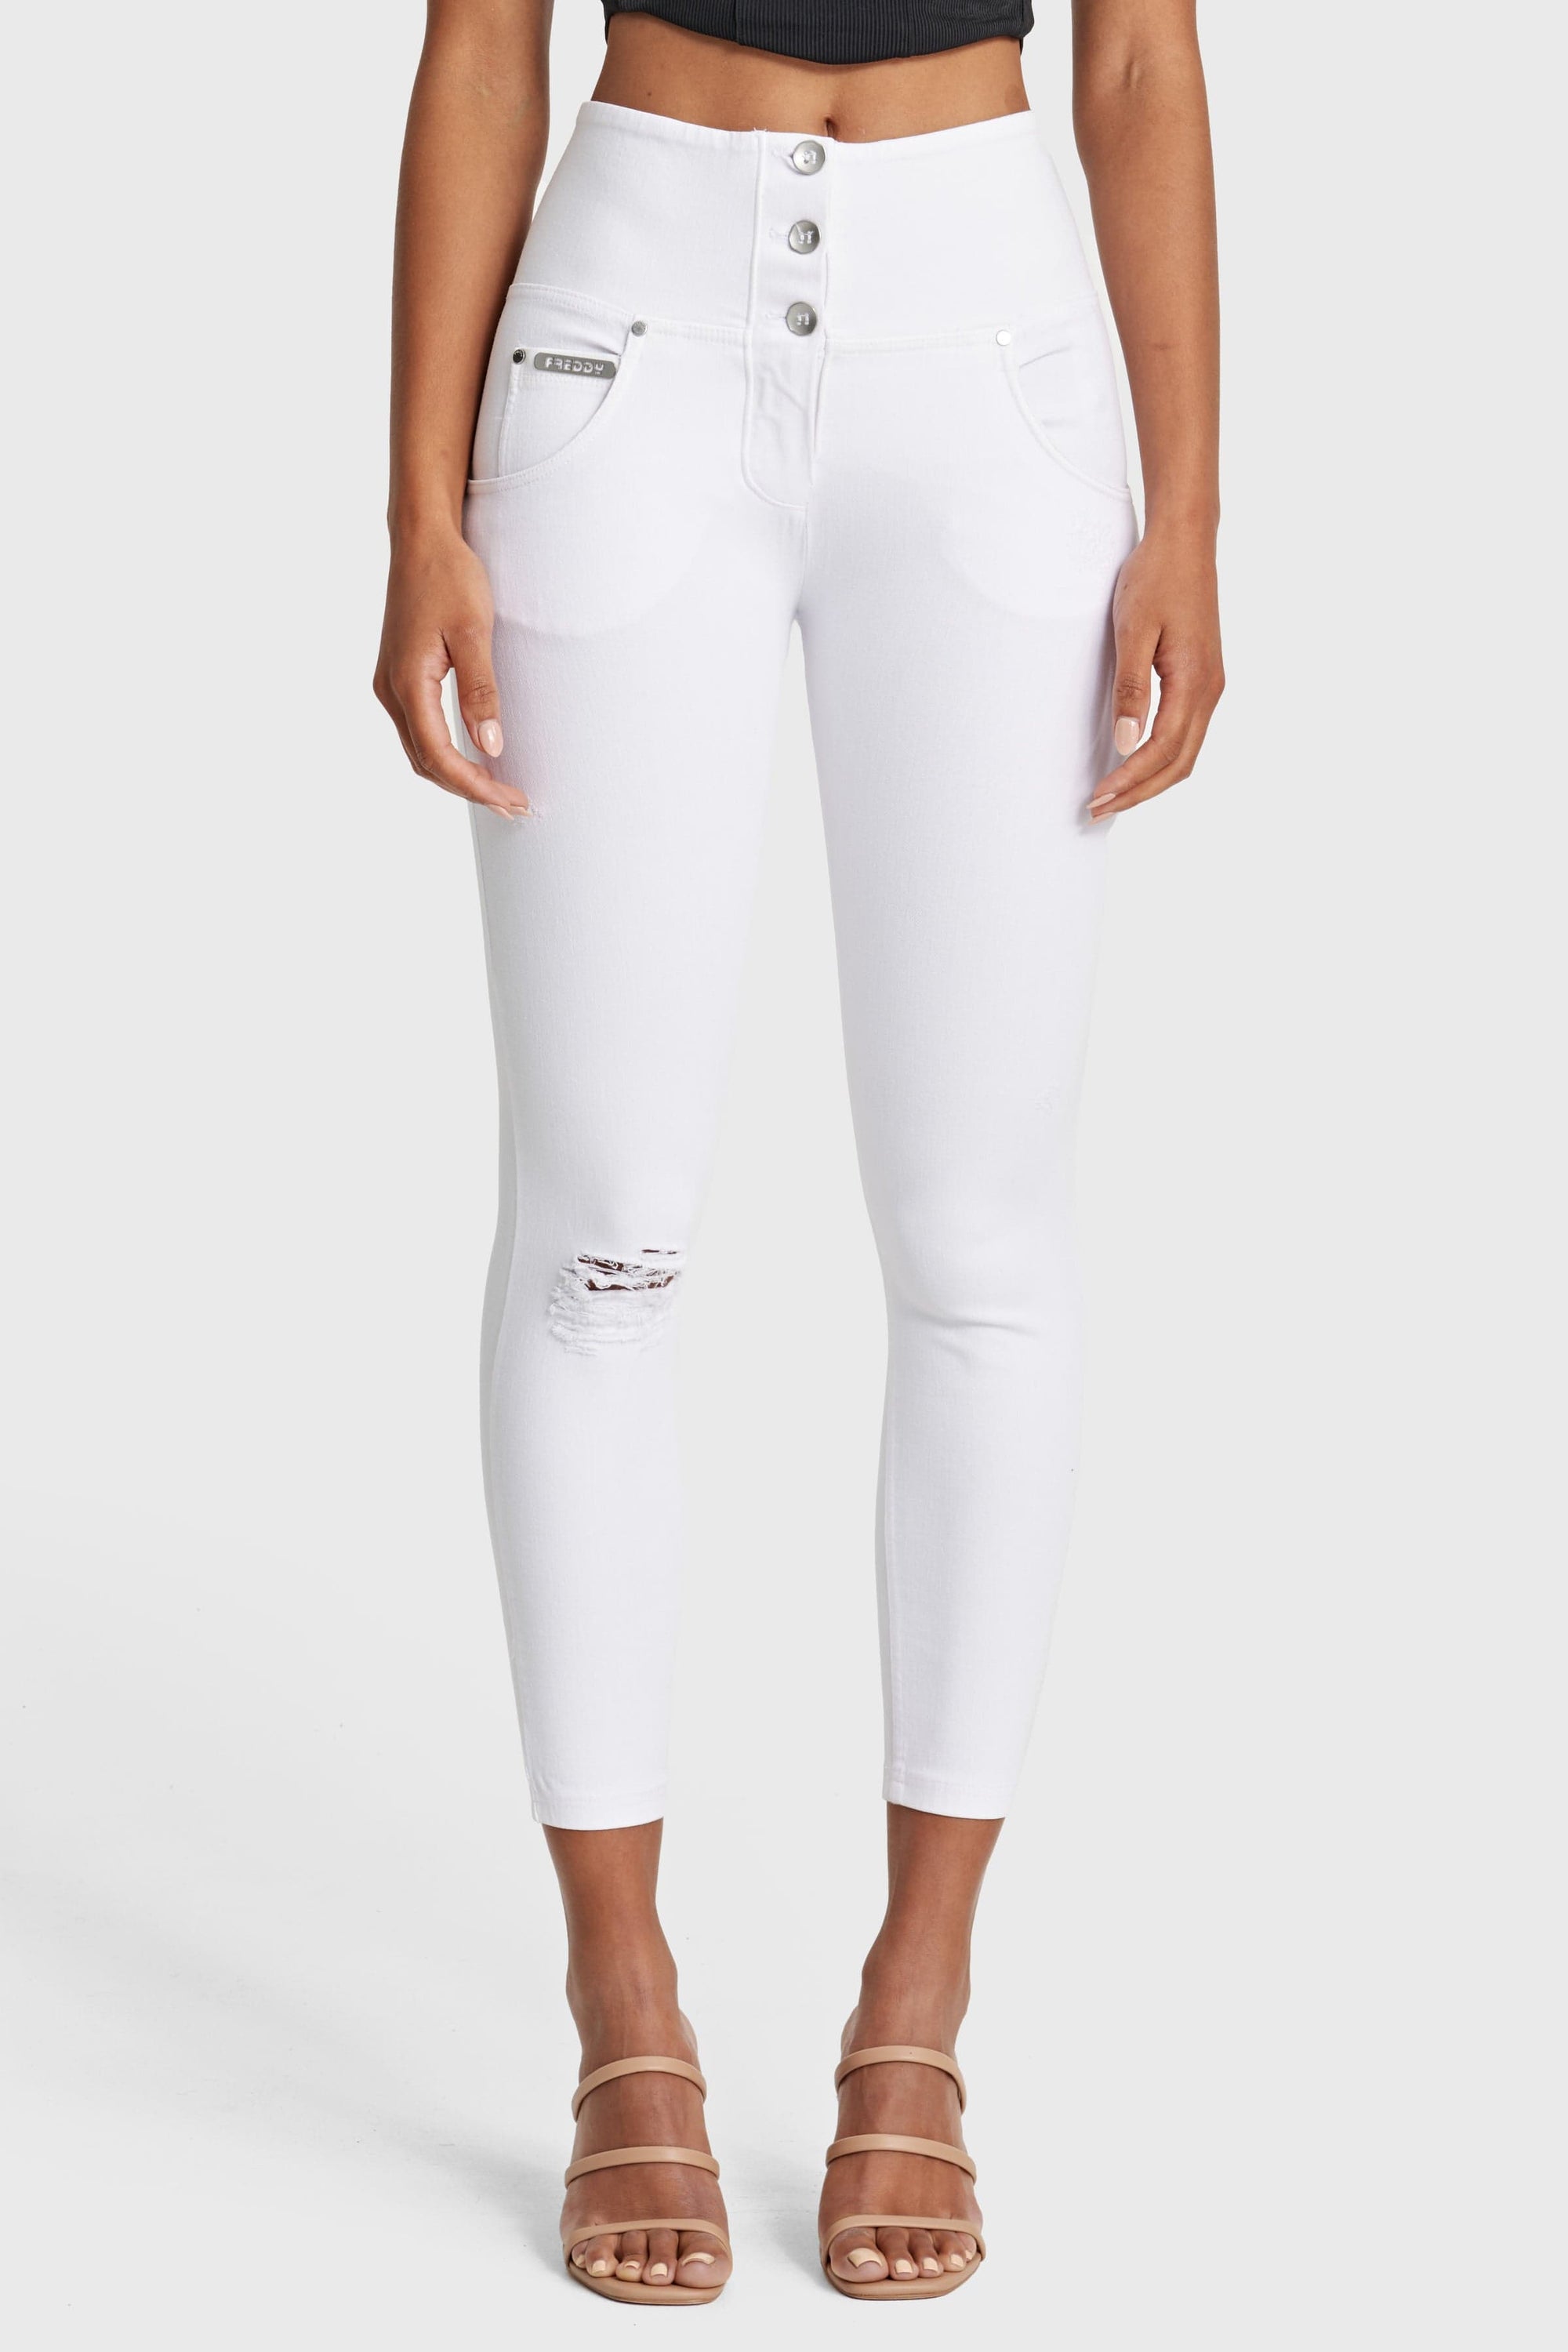 WR.UP® Snug Distressed Jeans - High Waisted - Petite Length - White 1